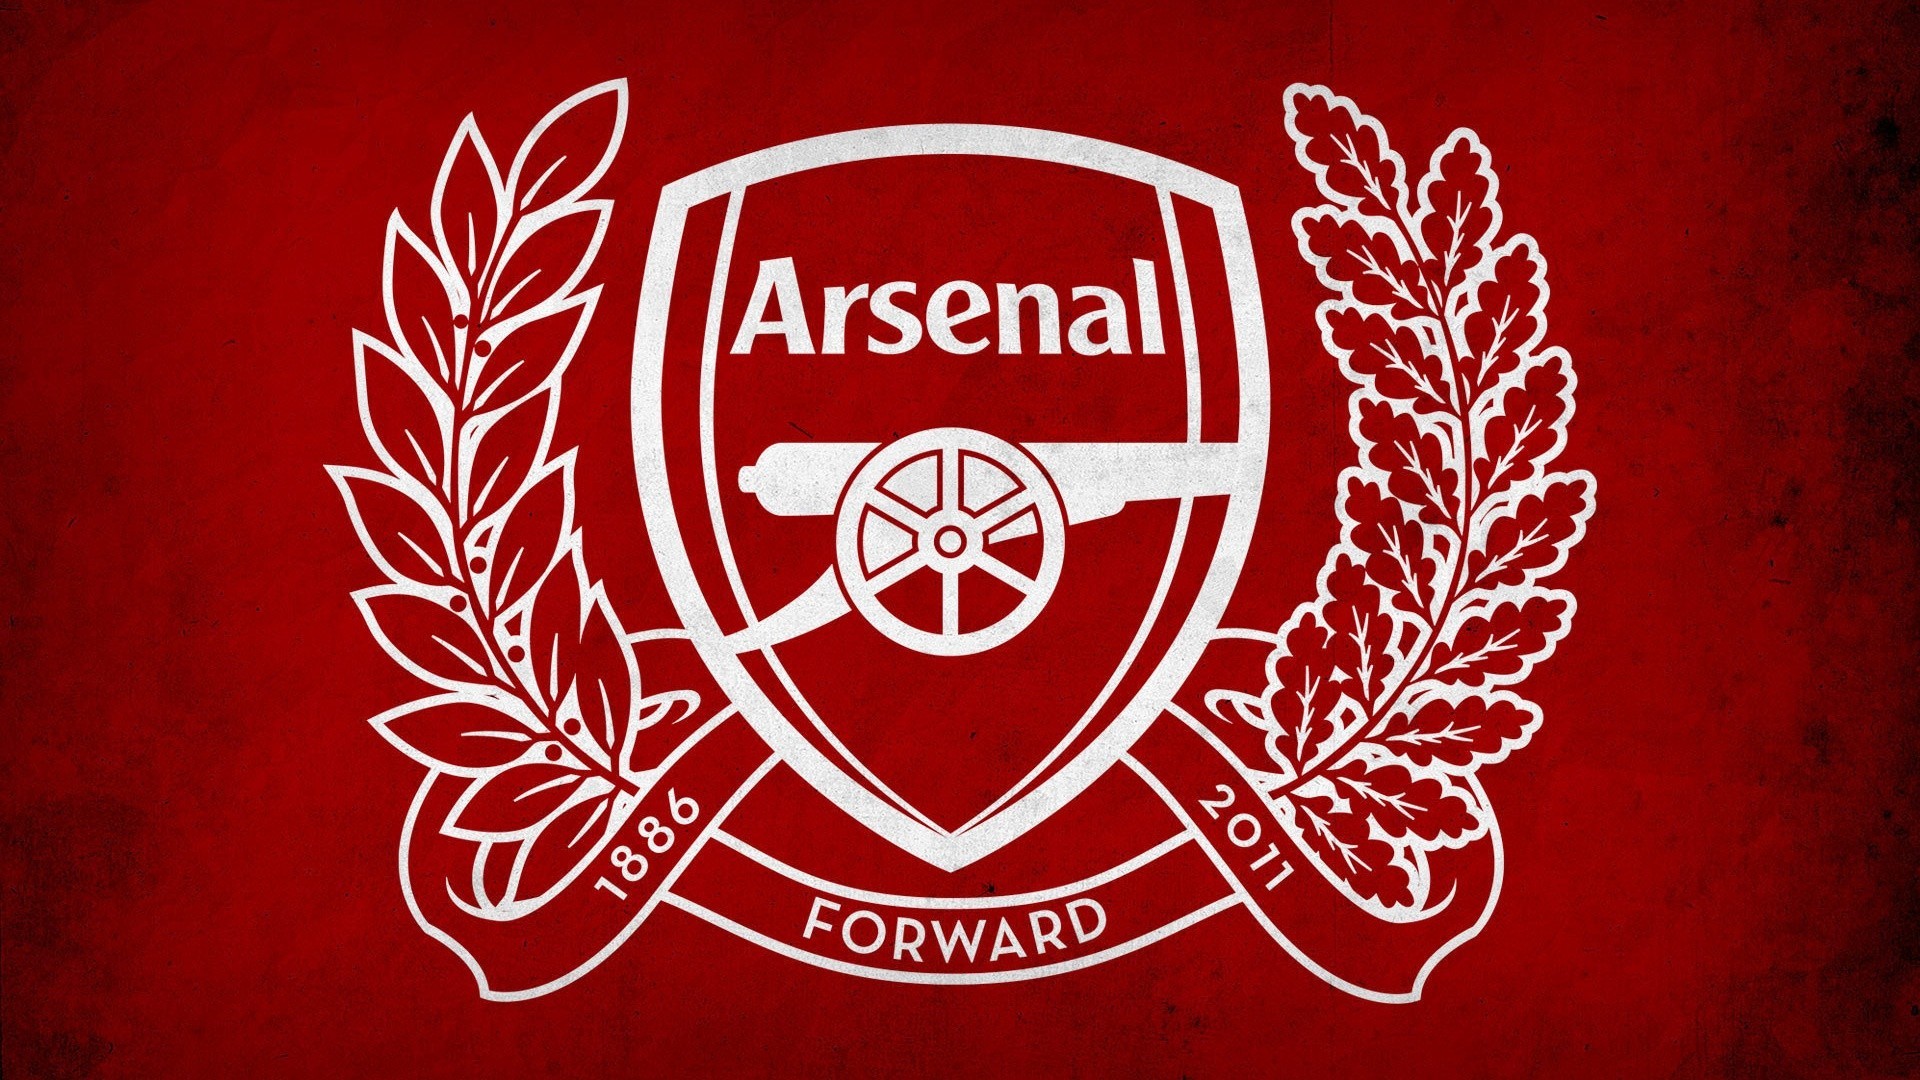 General 1920x1080 Arsenal London logo 1886 (Year) sport soccer clubs soccer